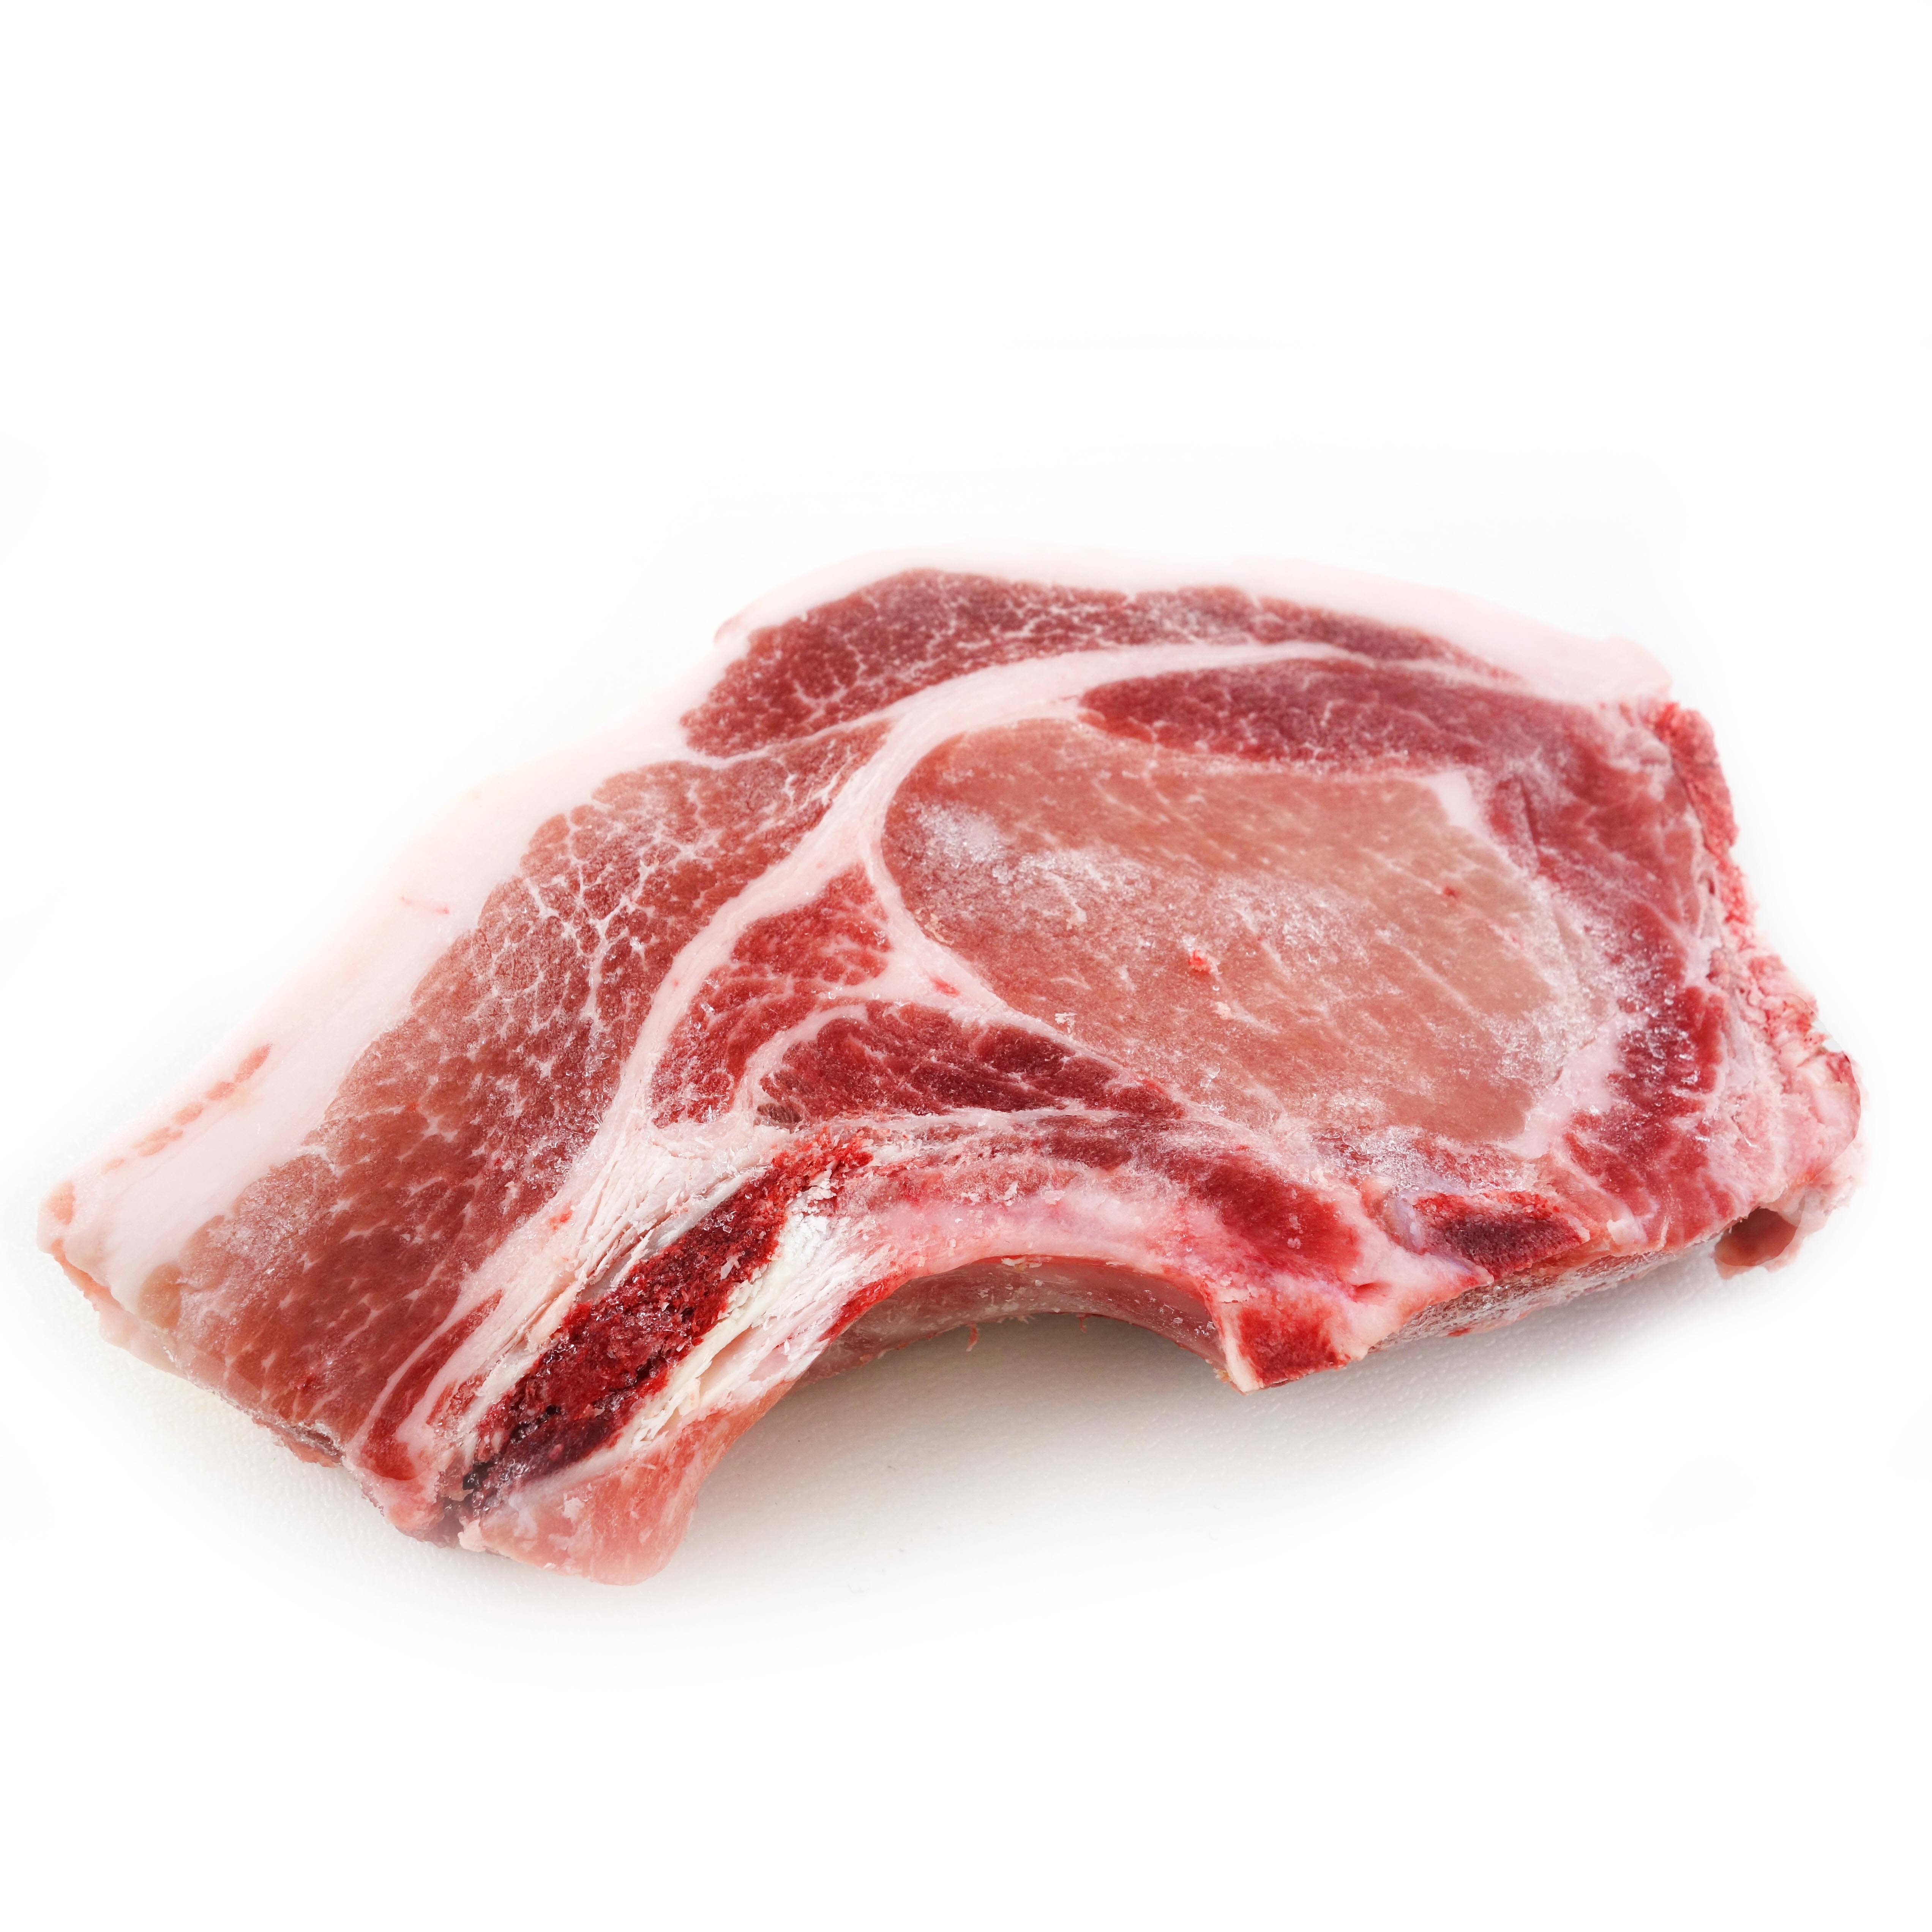 Frozen AUS Borrowdale Bone-in Pork Chop